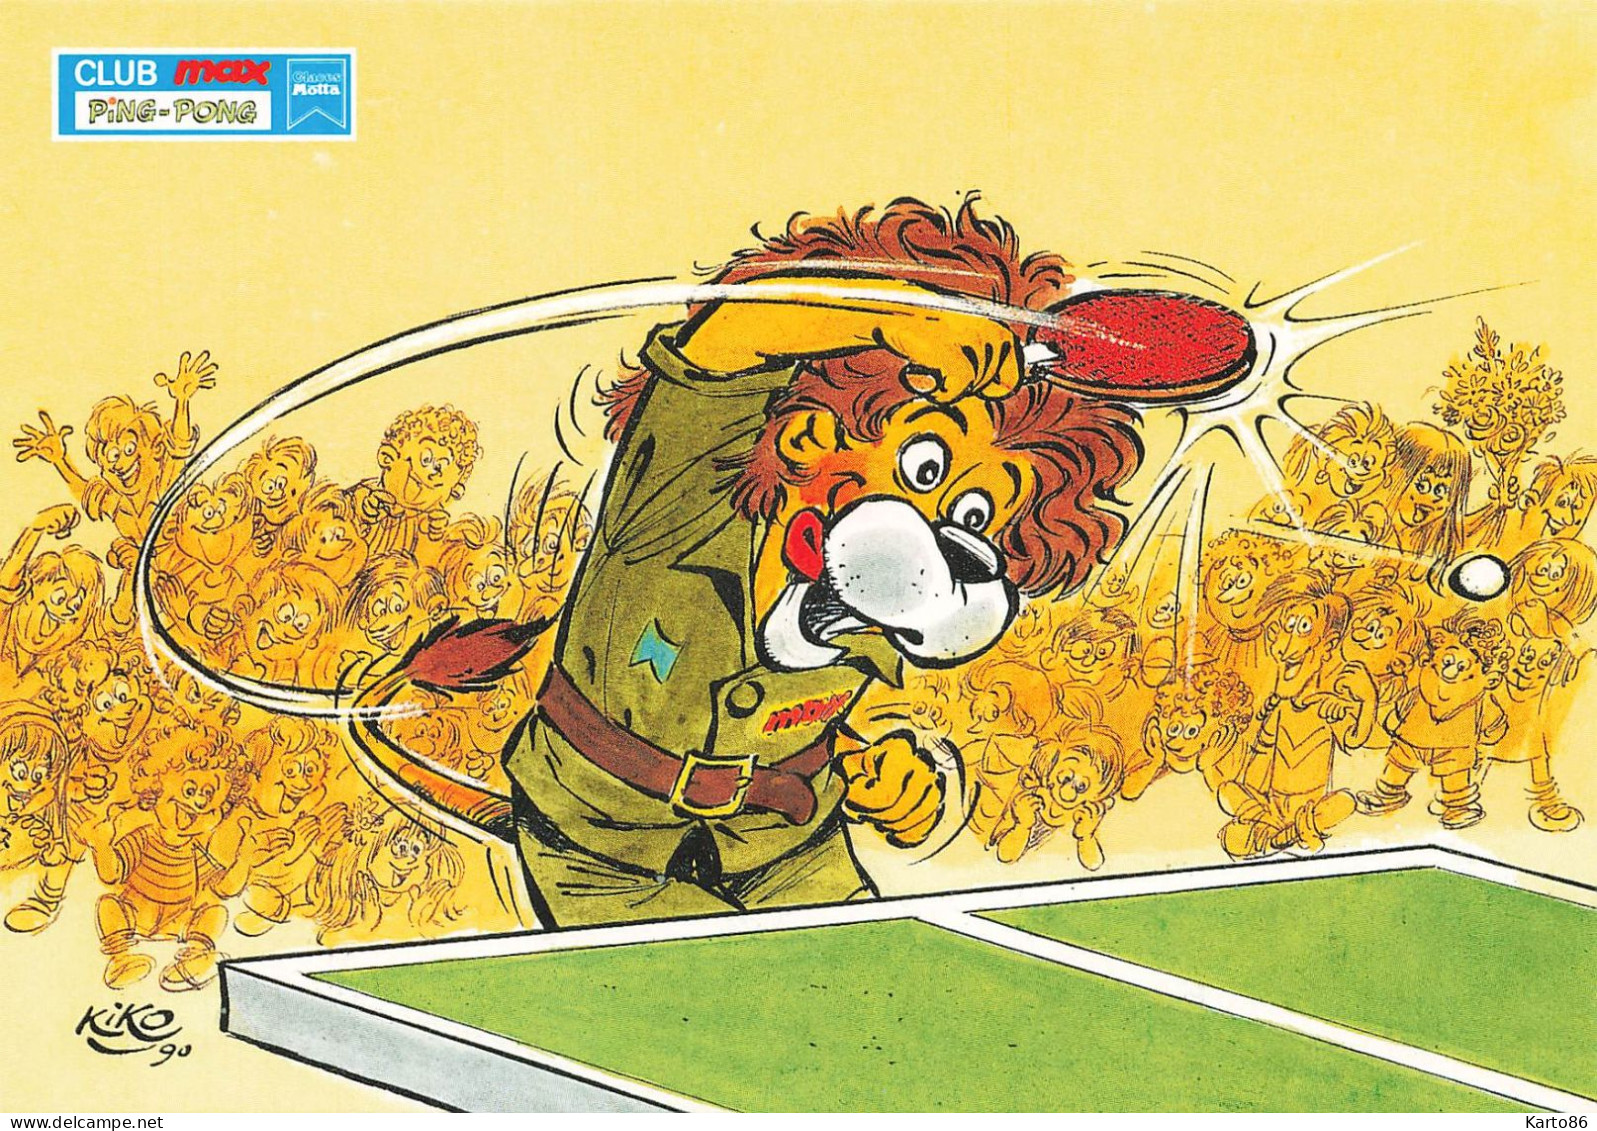 Le Tennis De Table , Sport * CPA Illustrateur KIKO Kiko * Club Max PING PONG * Ping Pong Lion Humanisé * 1990 - Table Tennis